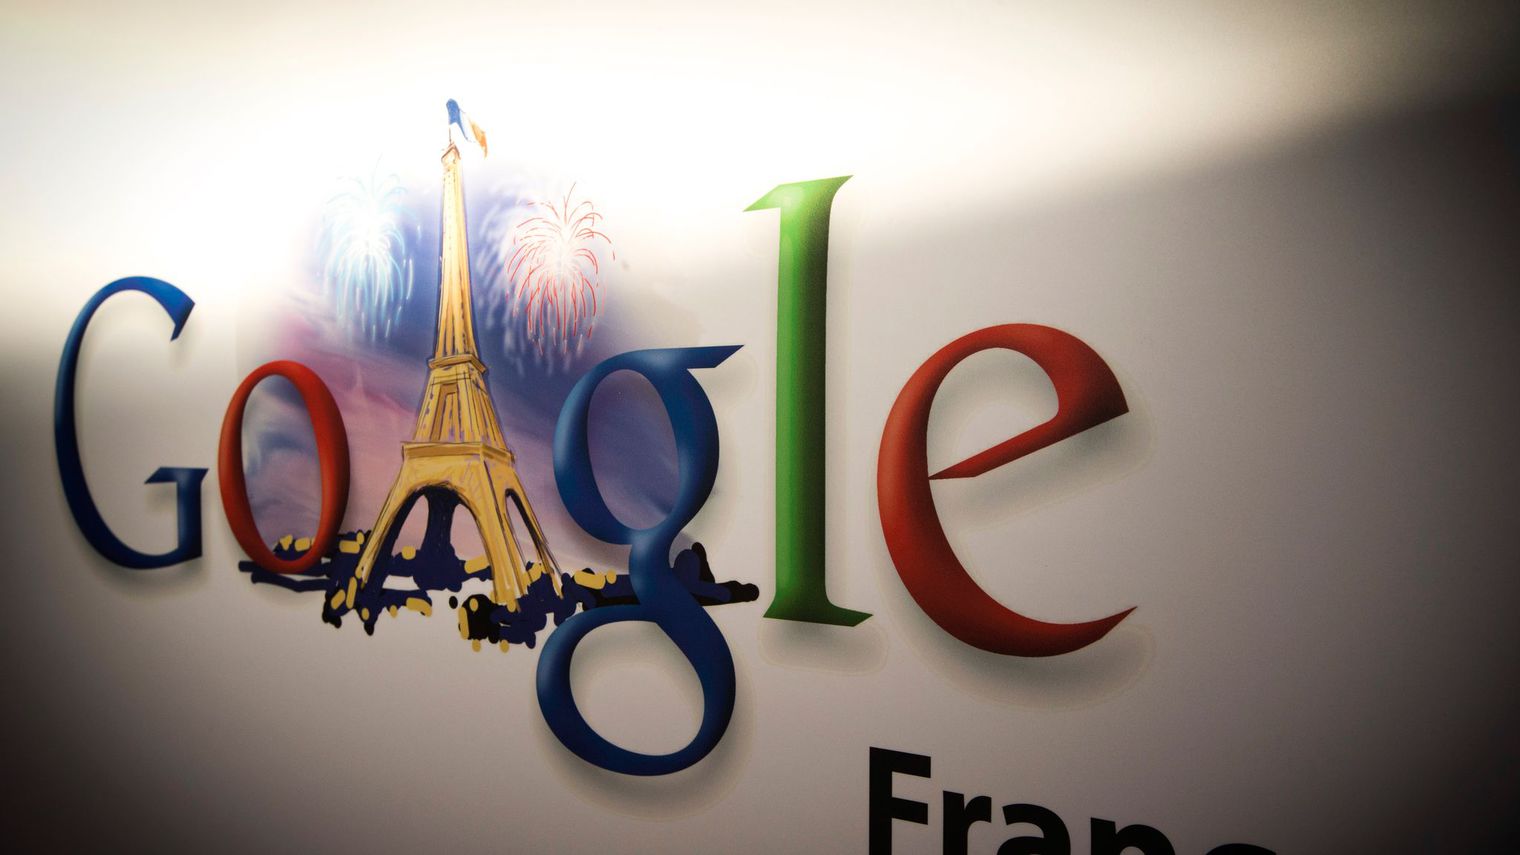 فرنسا تطالب "غوغل" بـ 1.6 مليار يورو